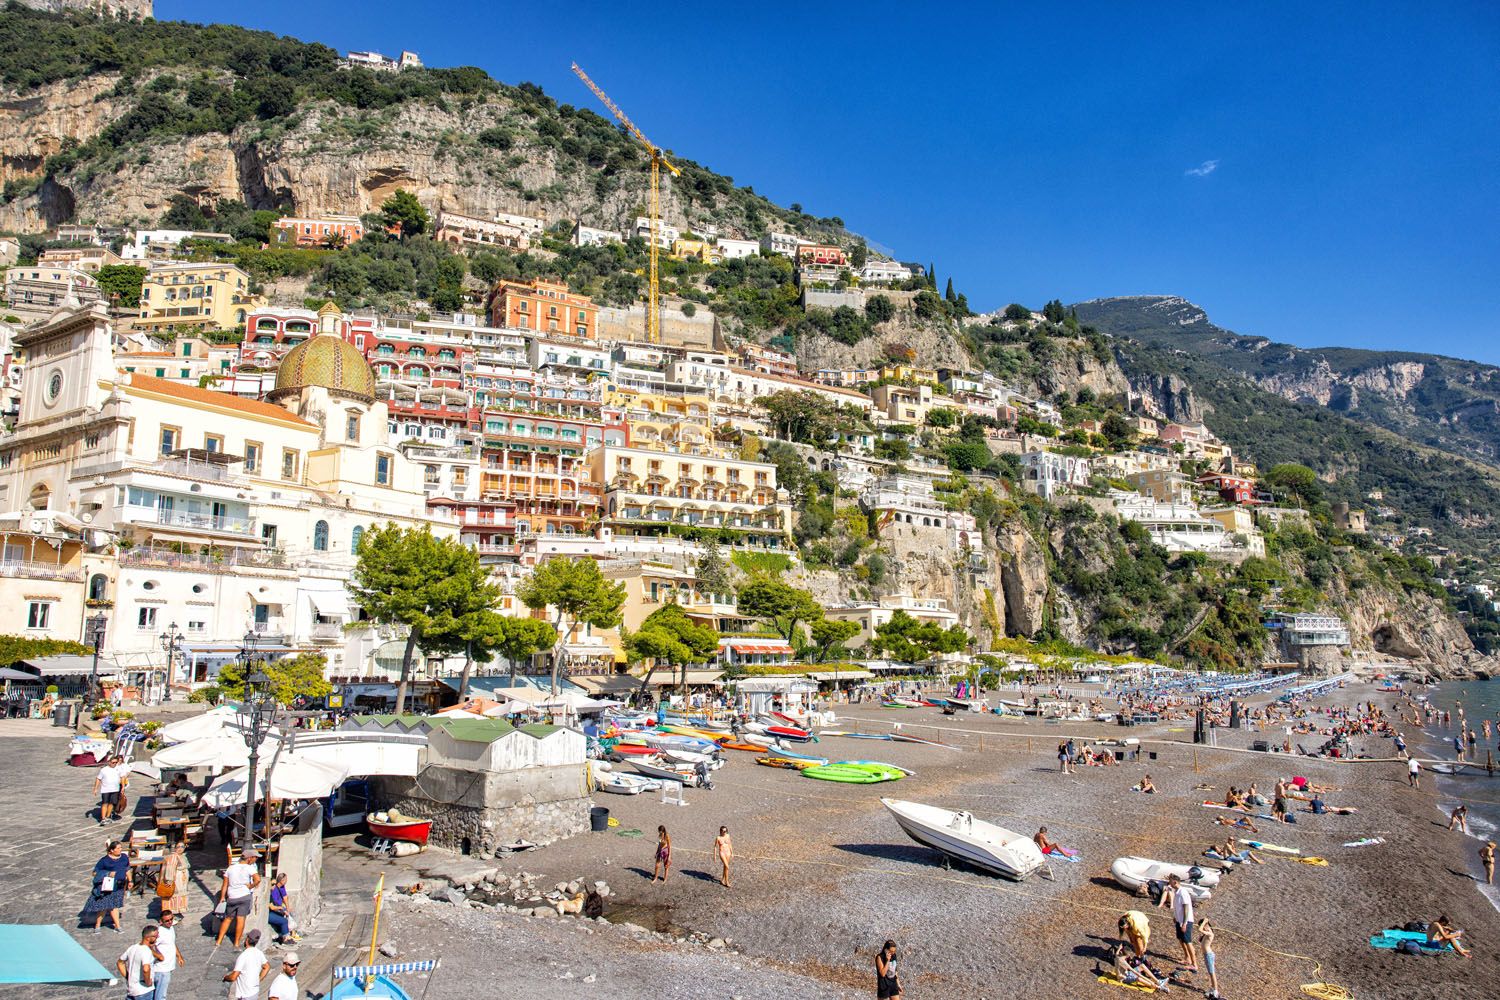 Spiaggia Grande Positano | Where to Stay on the Amalfi Coast